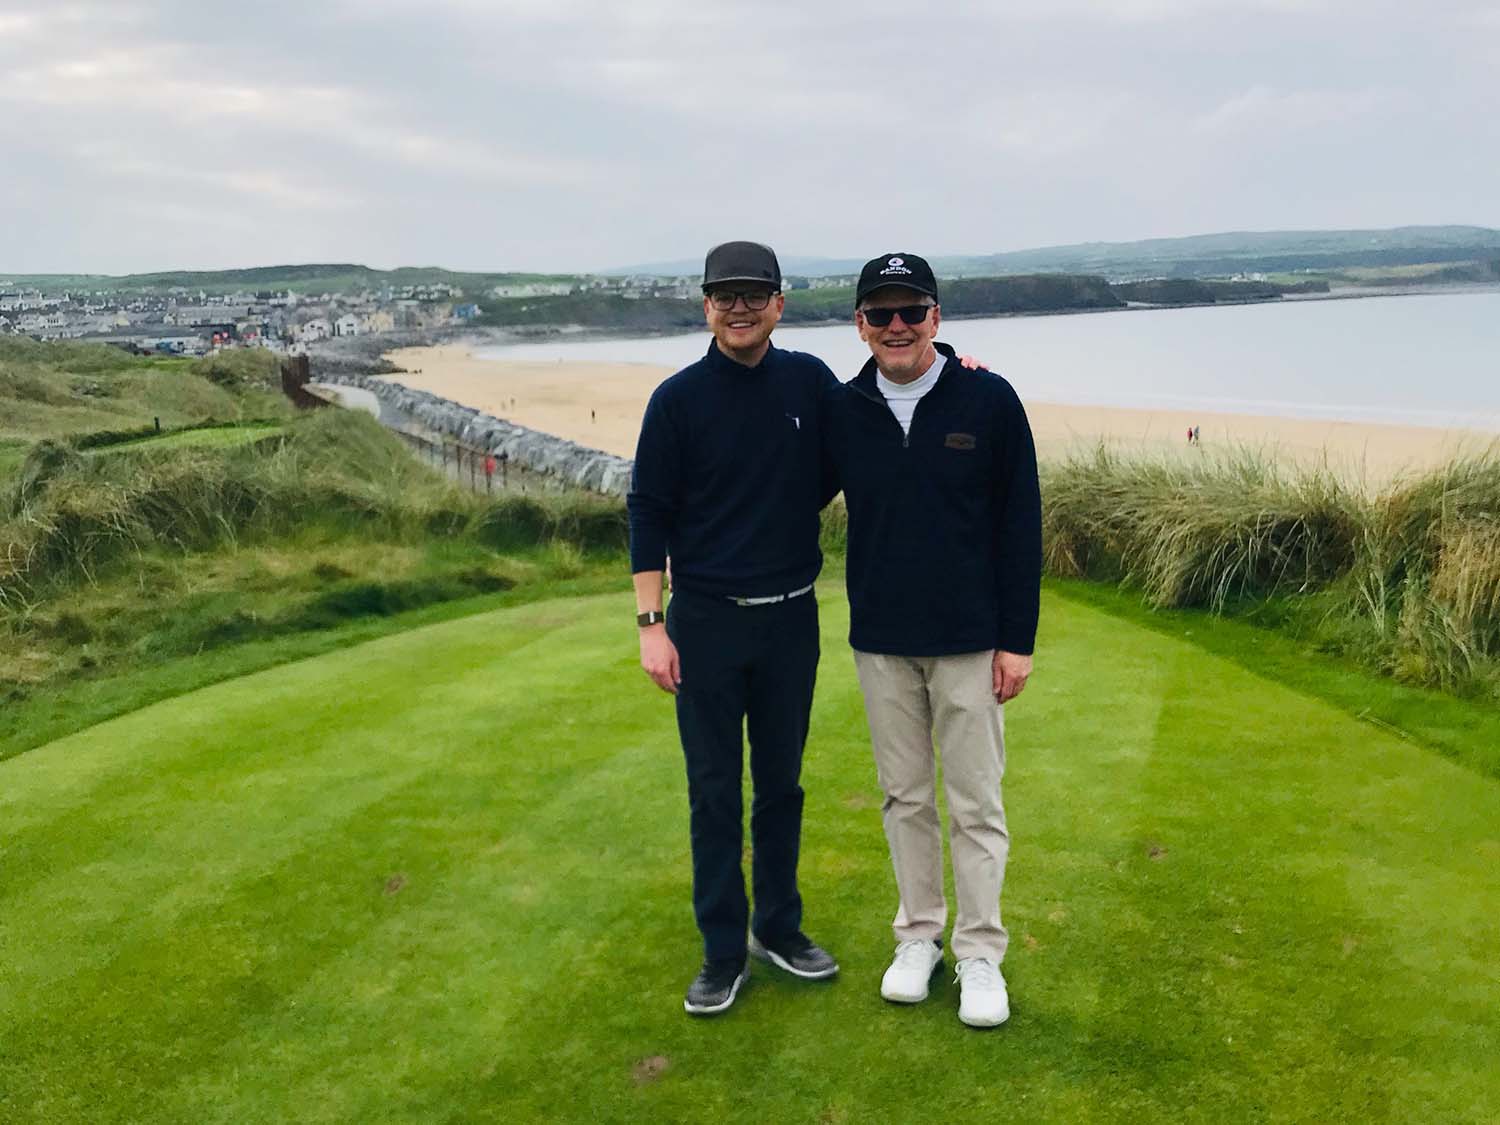 Family Golf Trip to Ireland